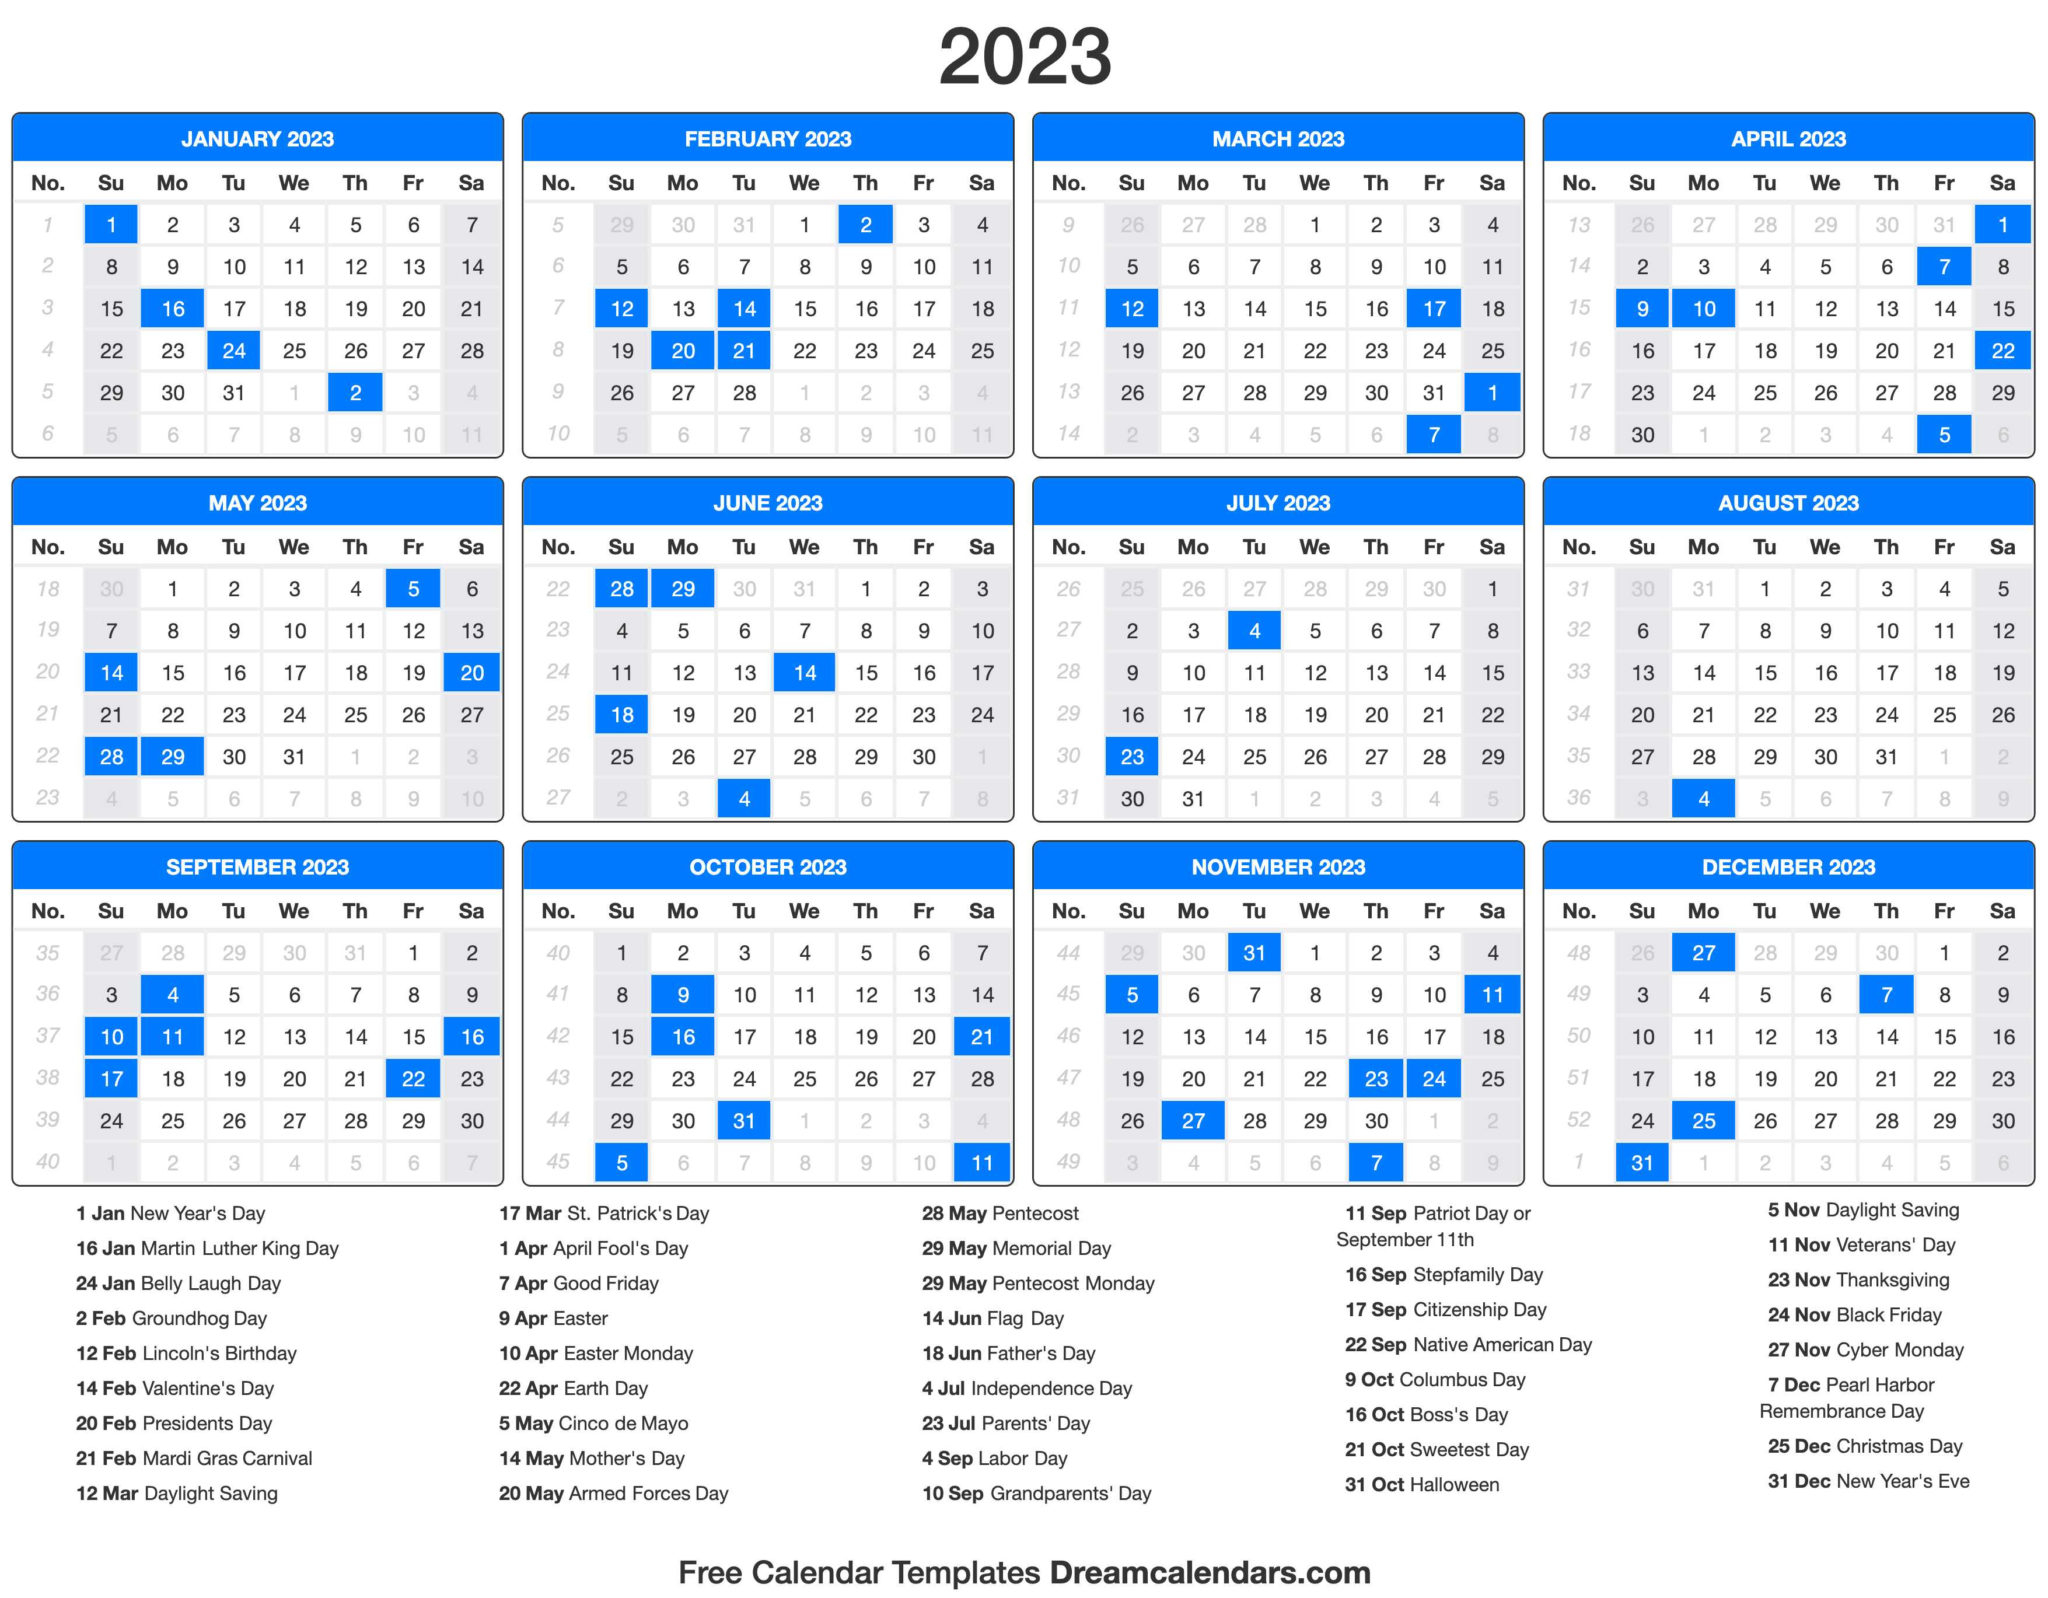 jewish-holiday-calendar-for-2023-2023-printable-calendar-calendar2023